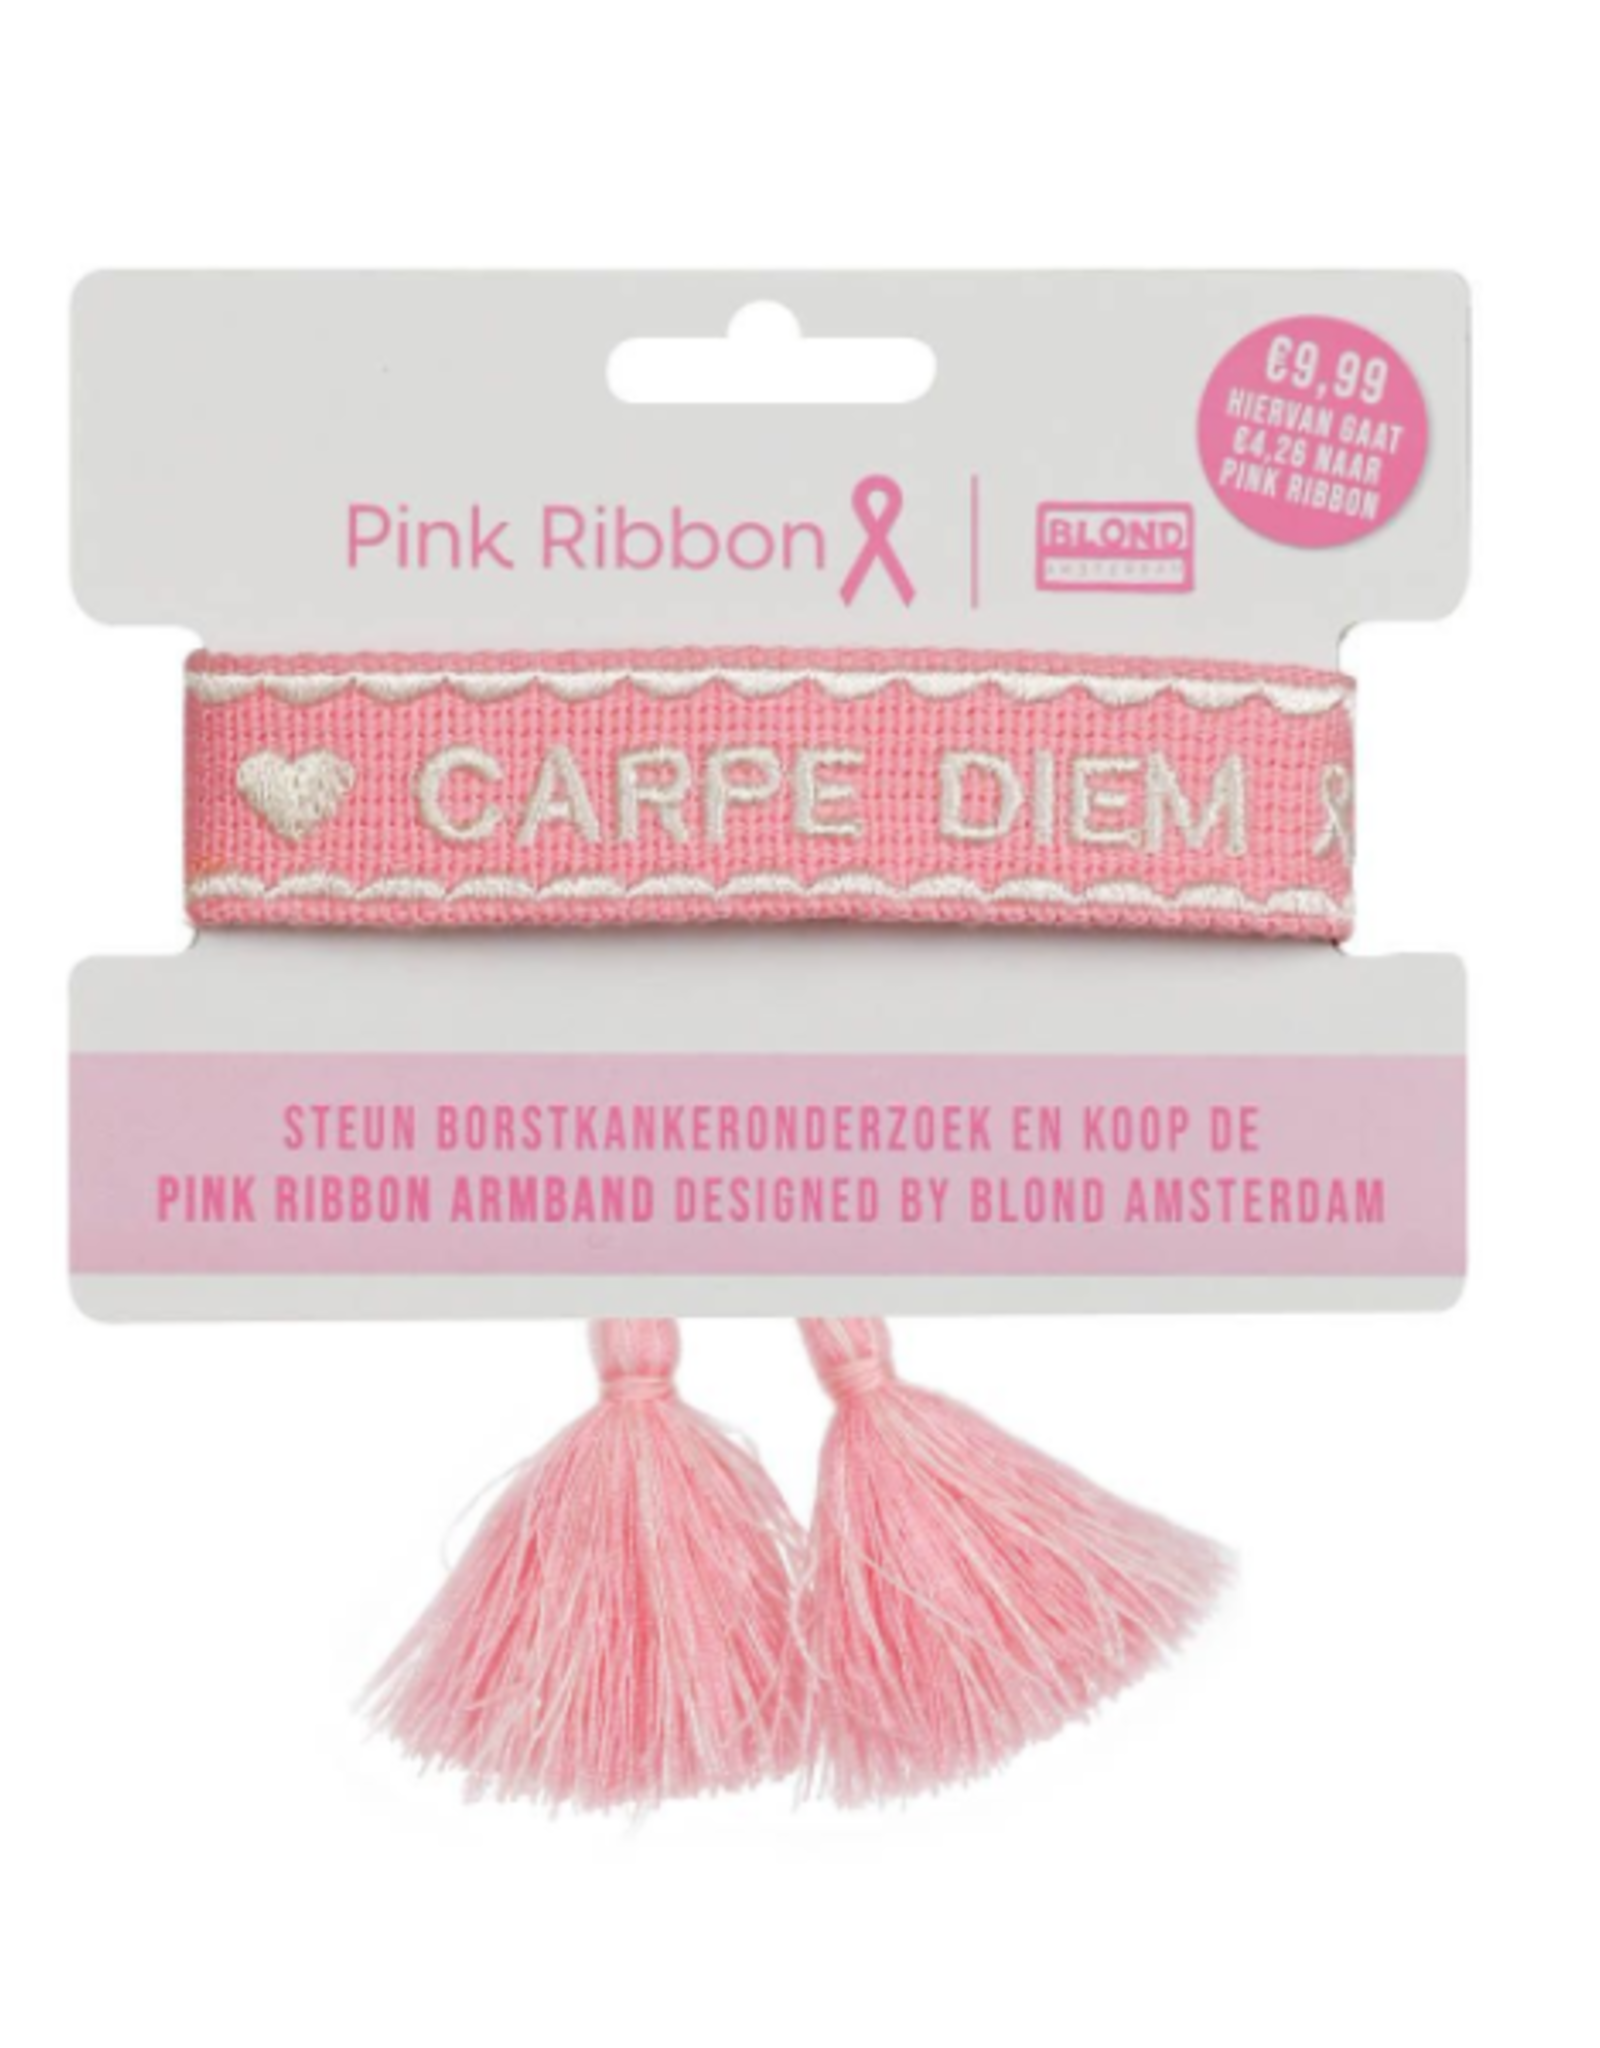 Blond Amsterdam Pink Ribbon Armband "Carpe Diem" - Blond Amsterdam